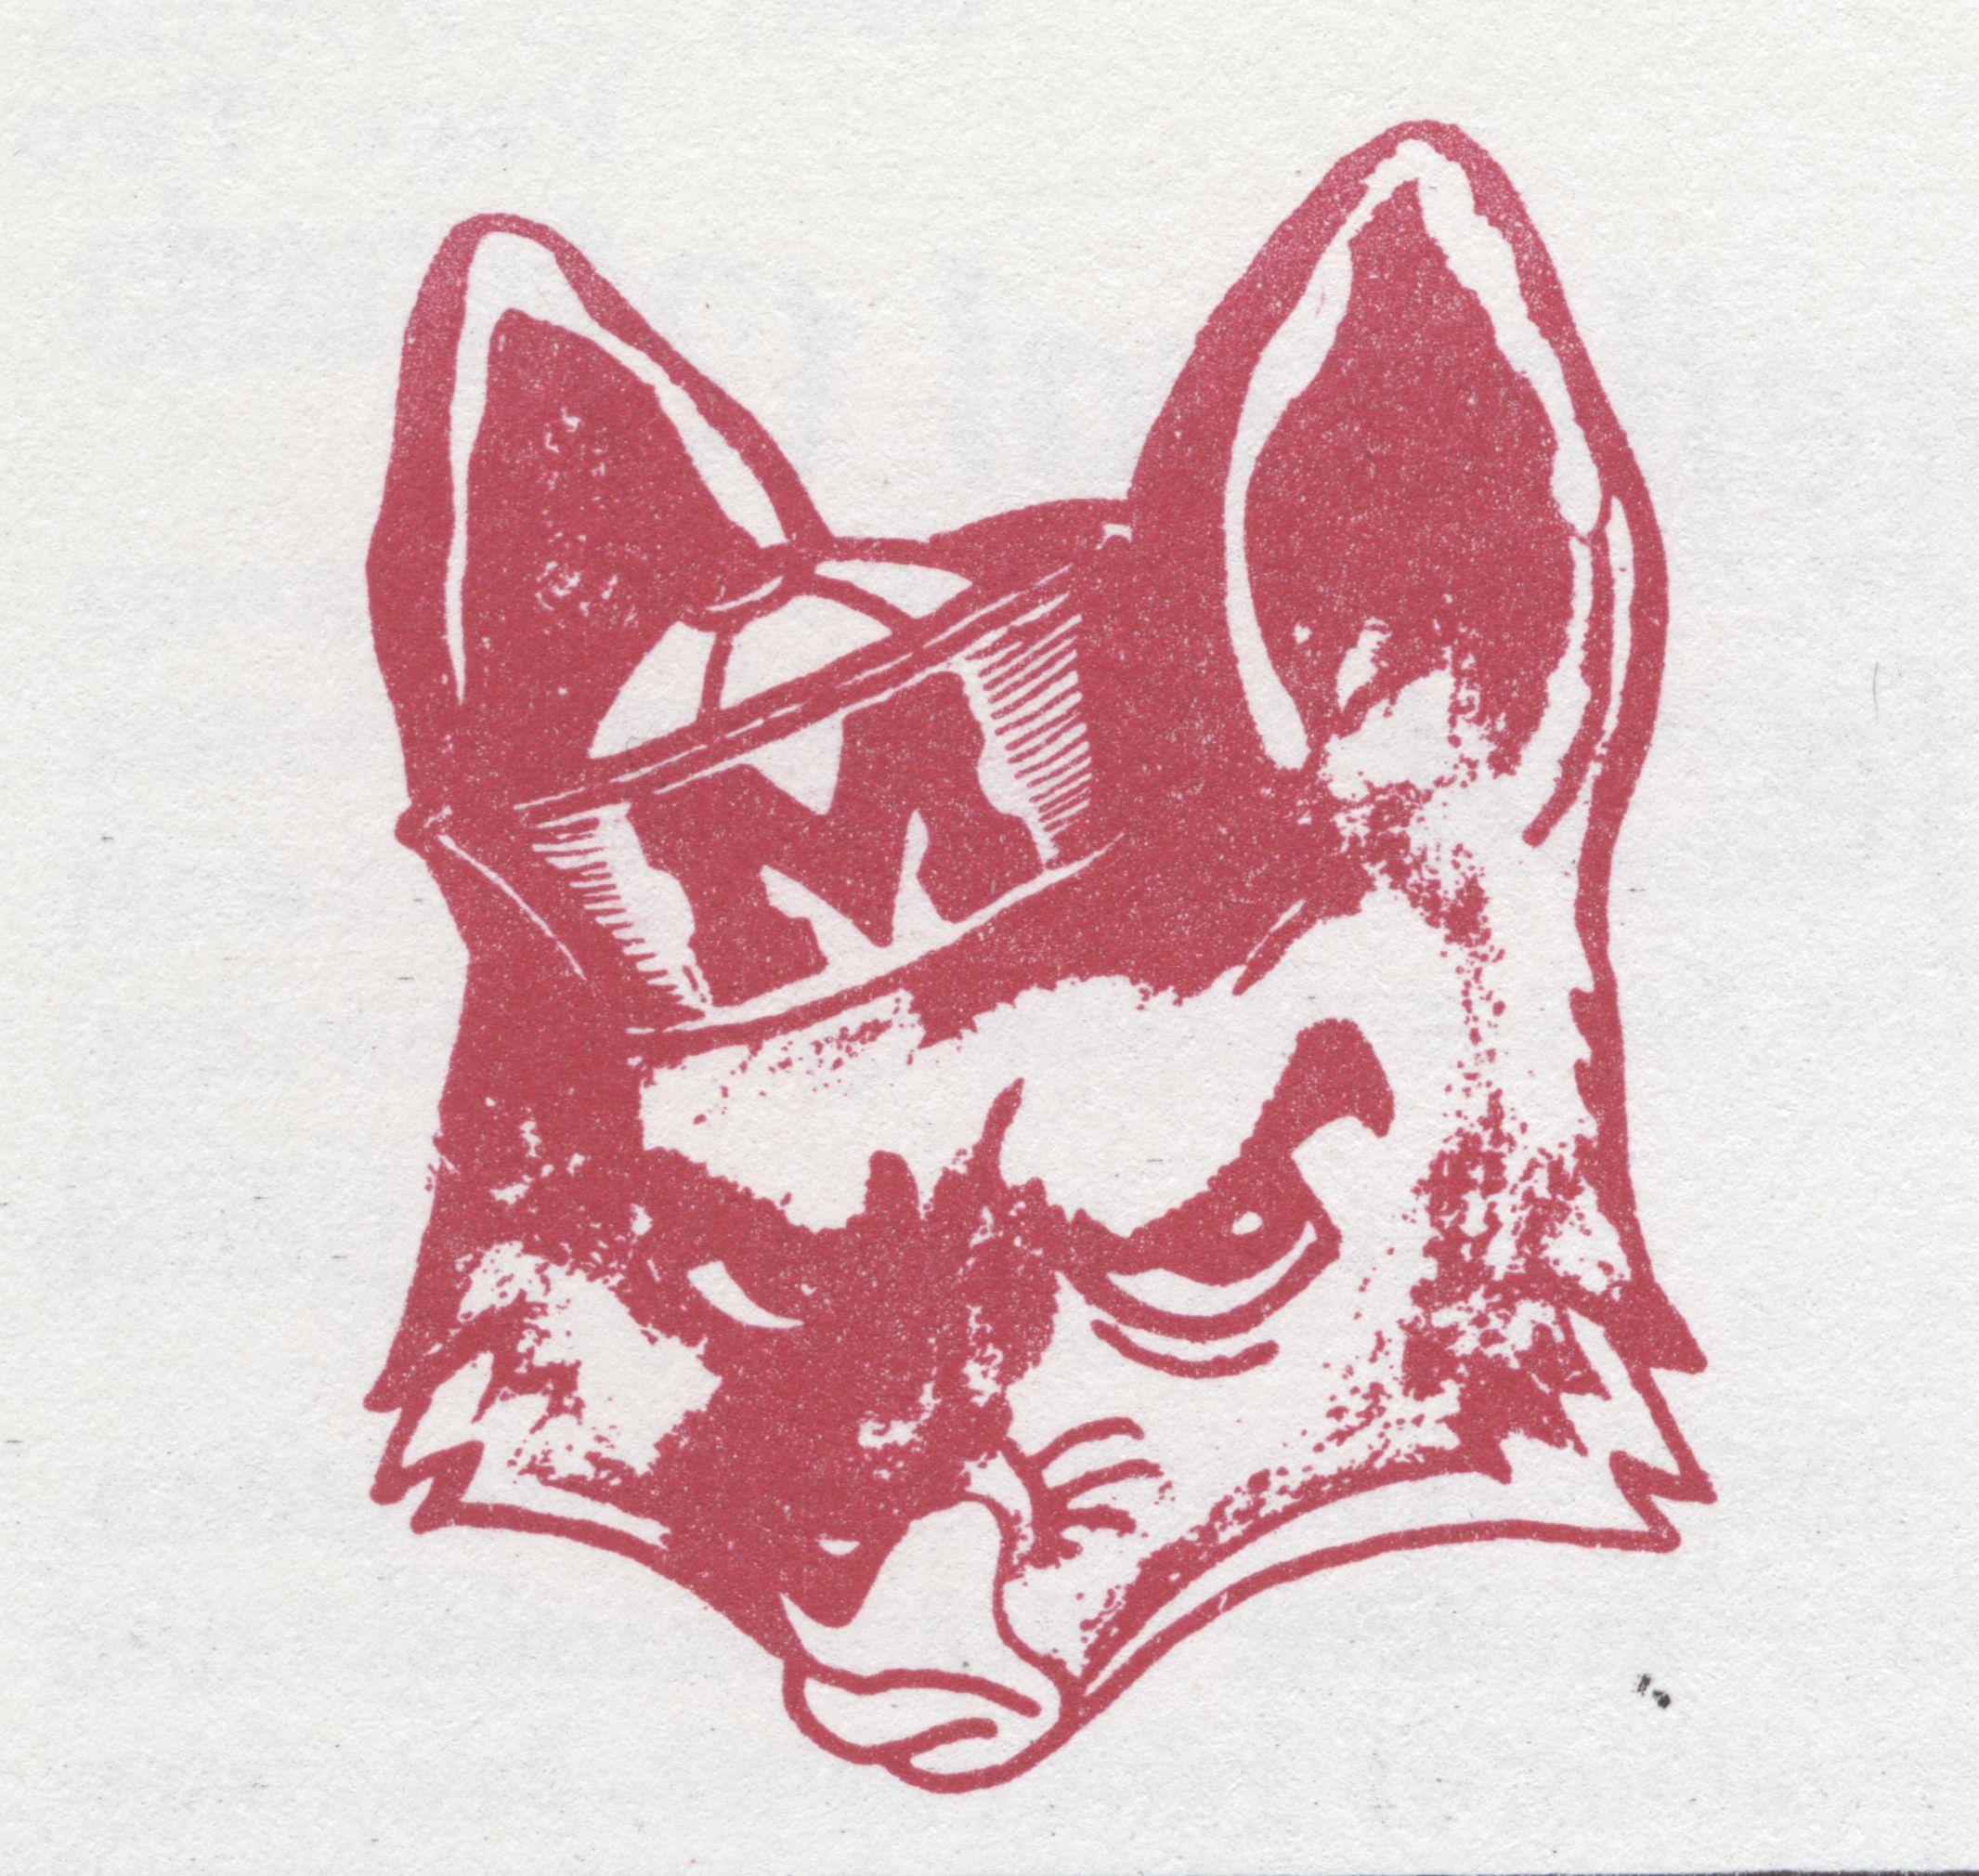 Marist Red Foxes Logo - Red Fox Logo 1964 | Marist FoxTales